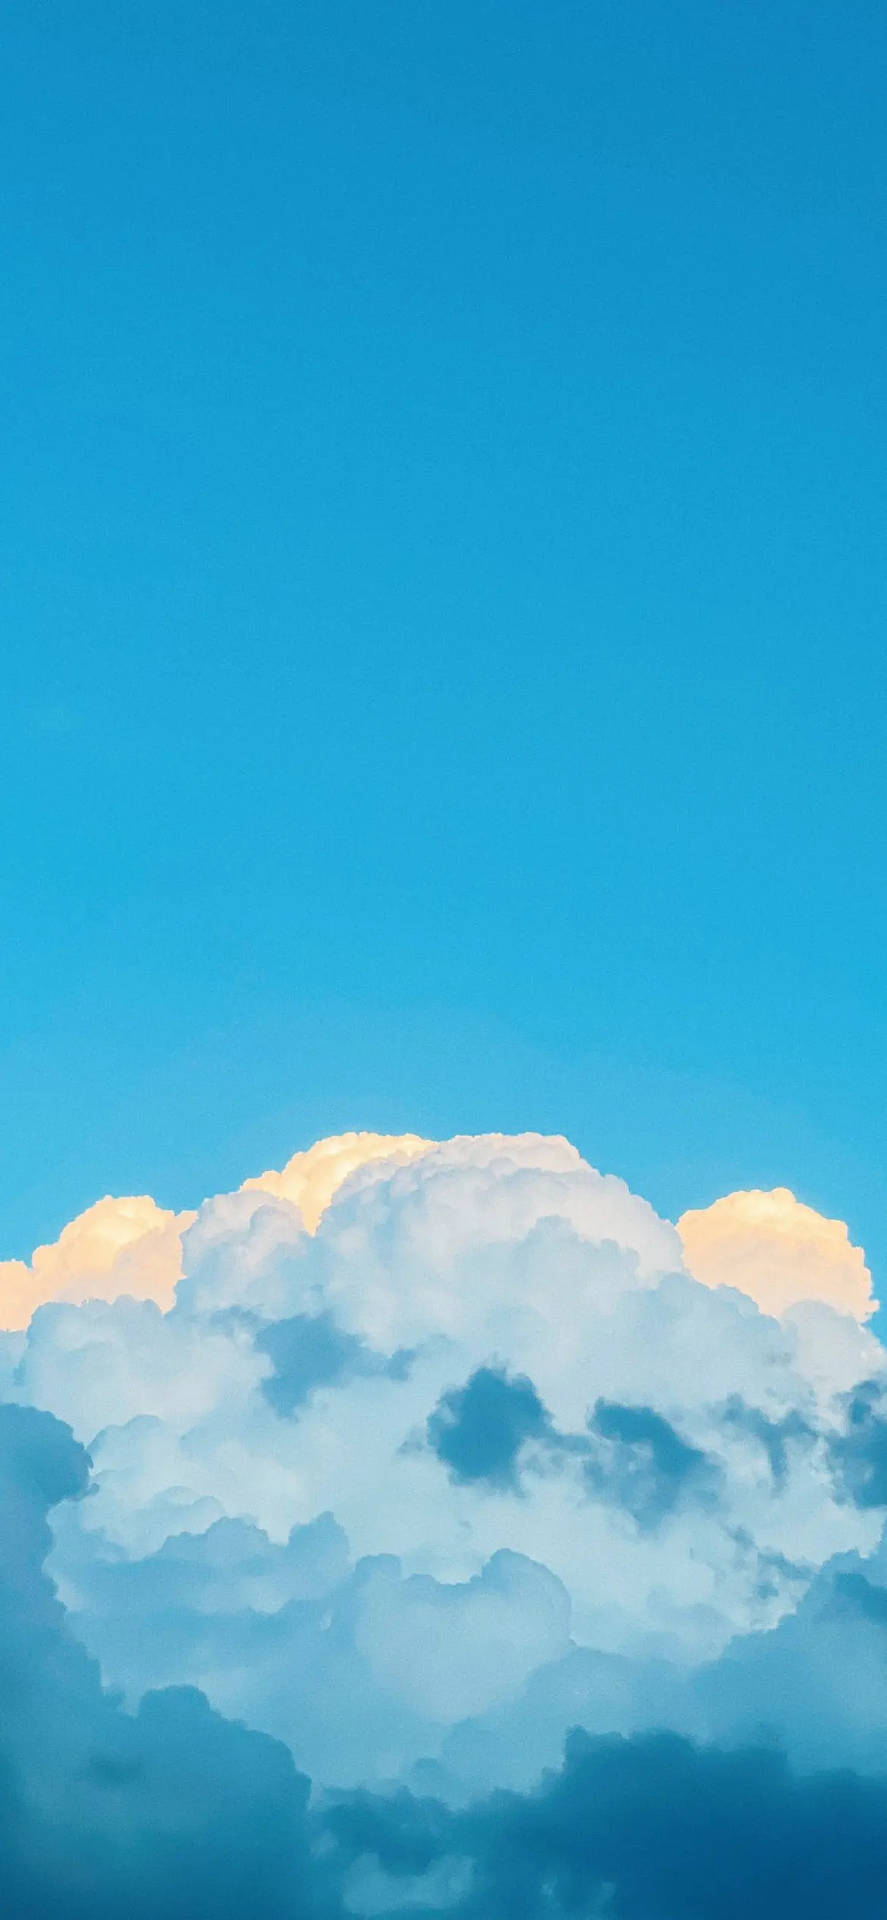 Cloudy Sky Light Blue Aesthetic iPhone Wallpaper